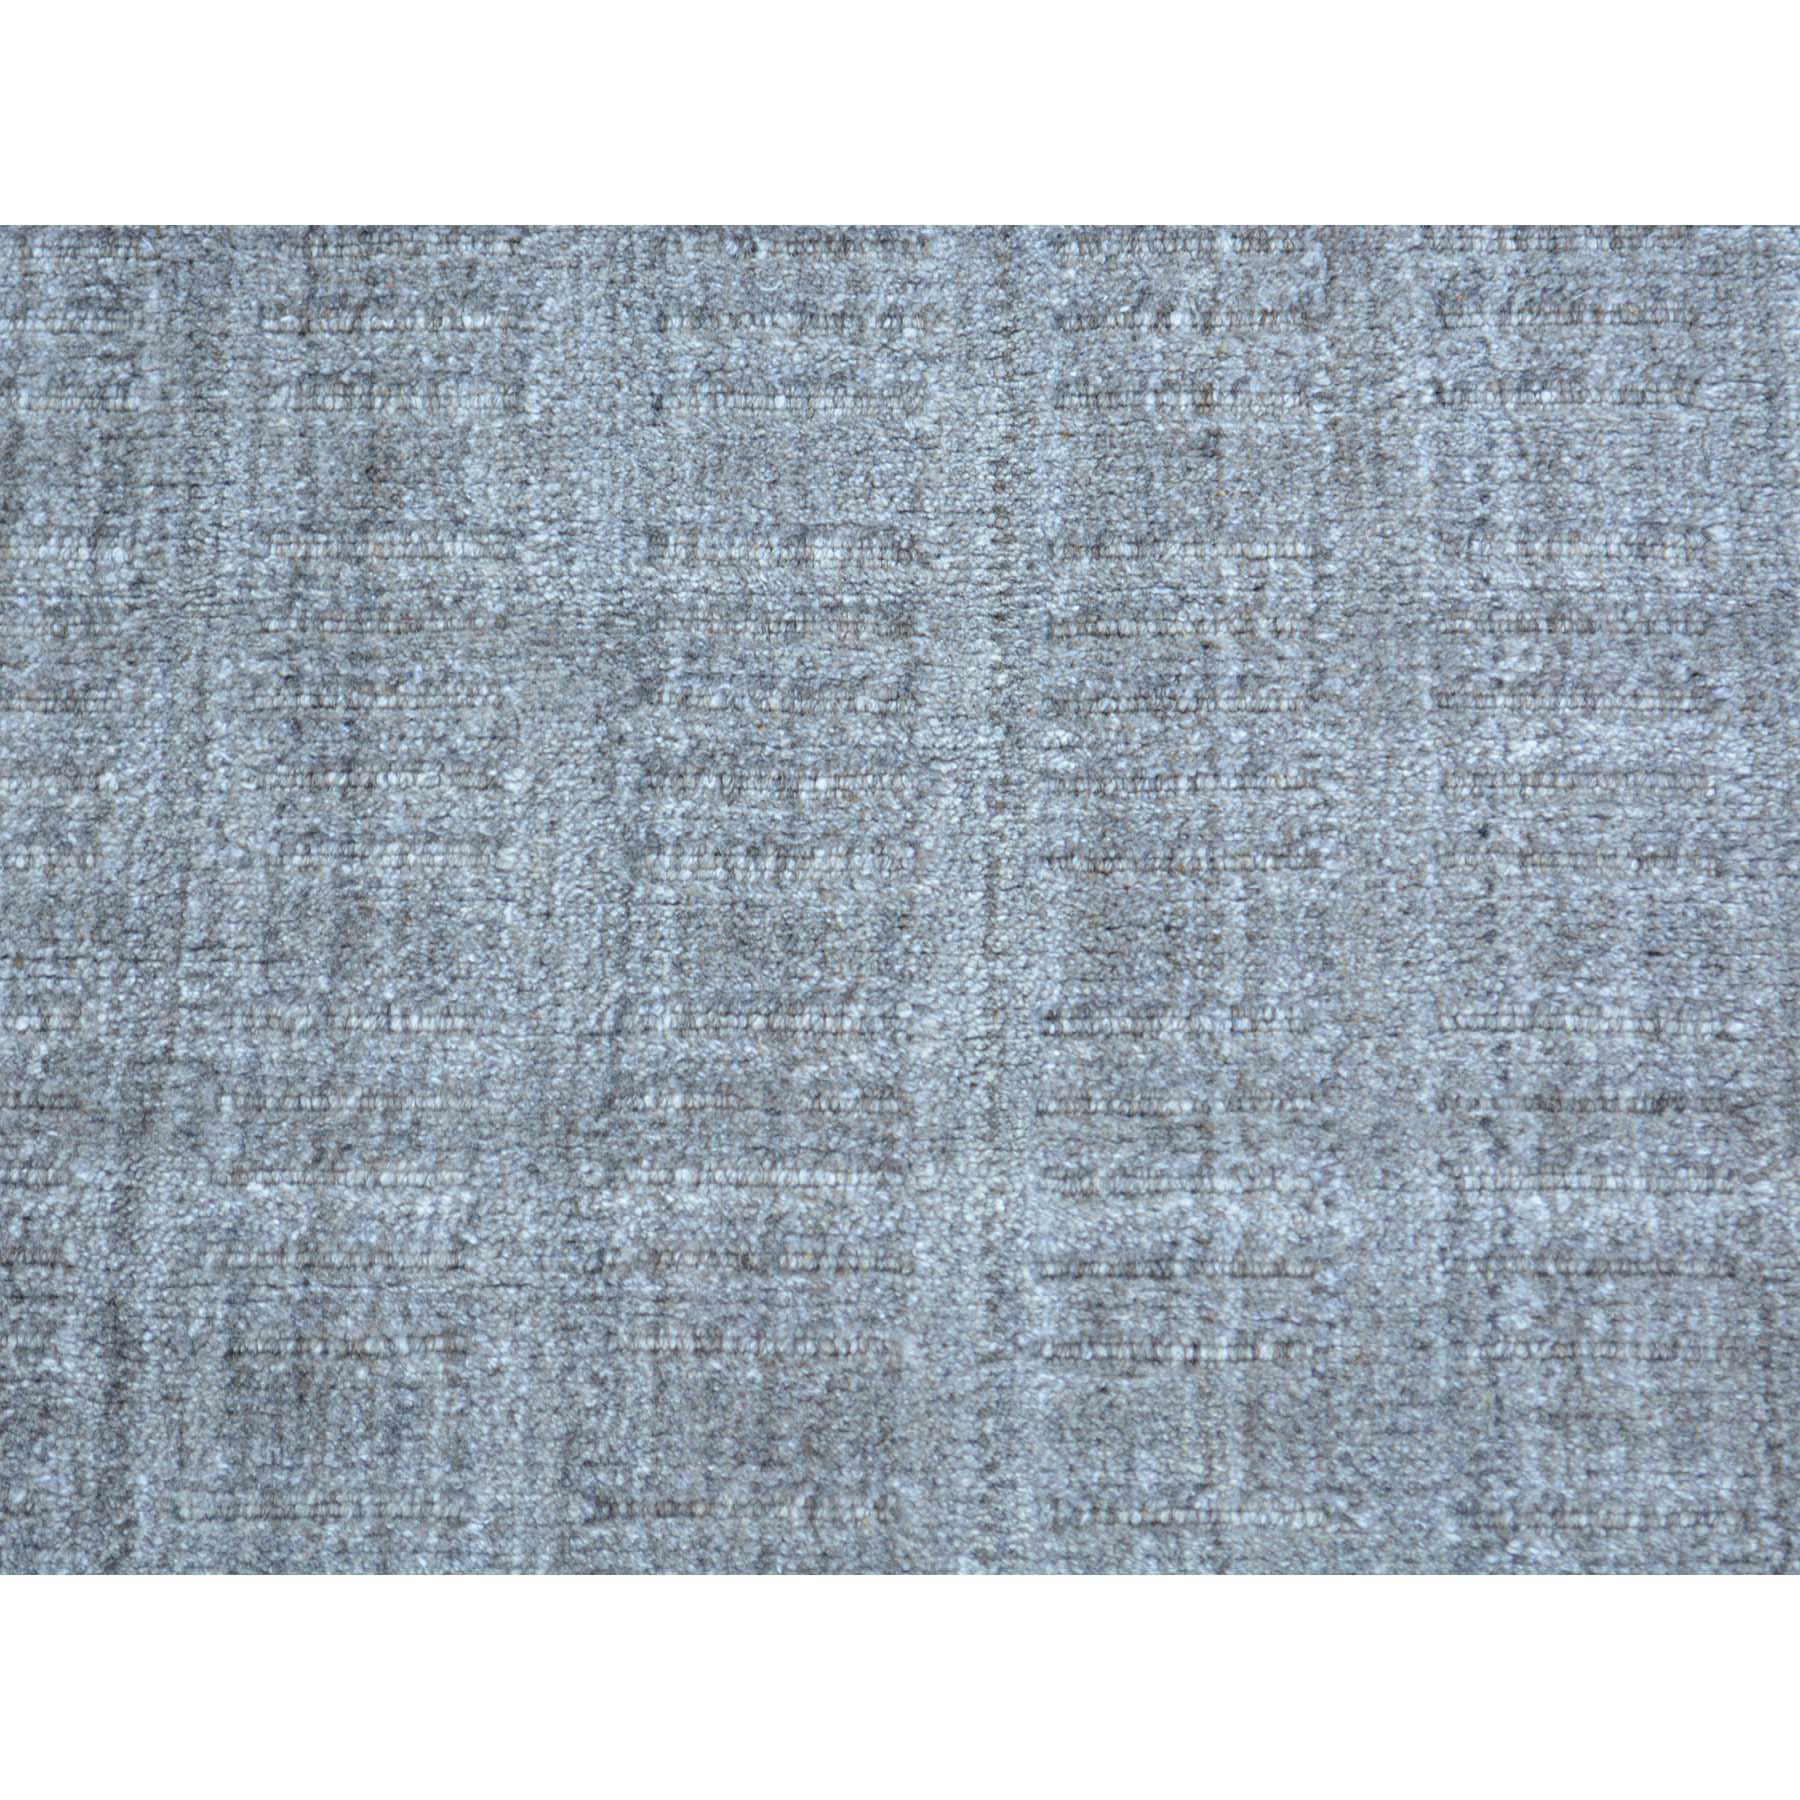 2-x3- Tone on Tone Hand Loomed Grey Wool and Silk Rug 